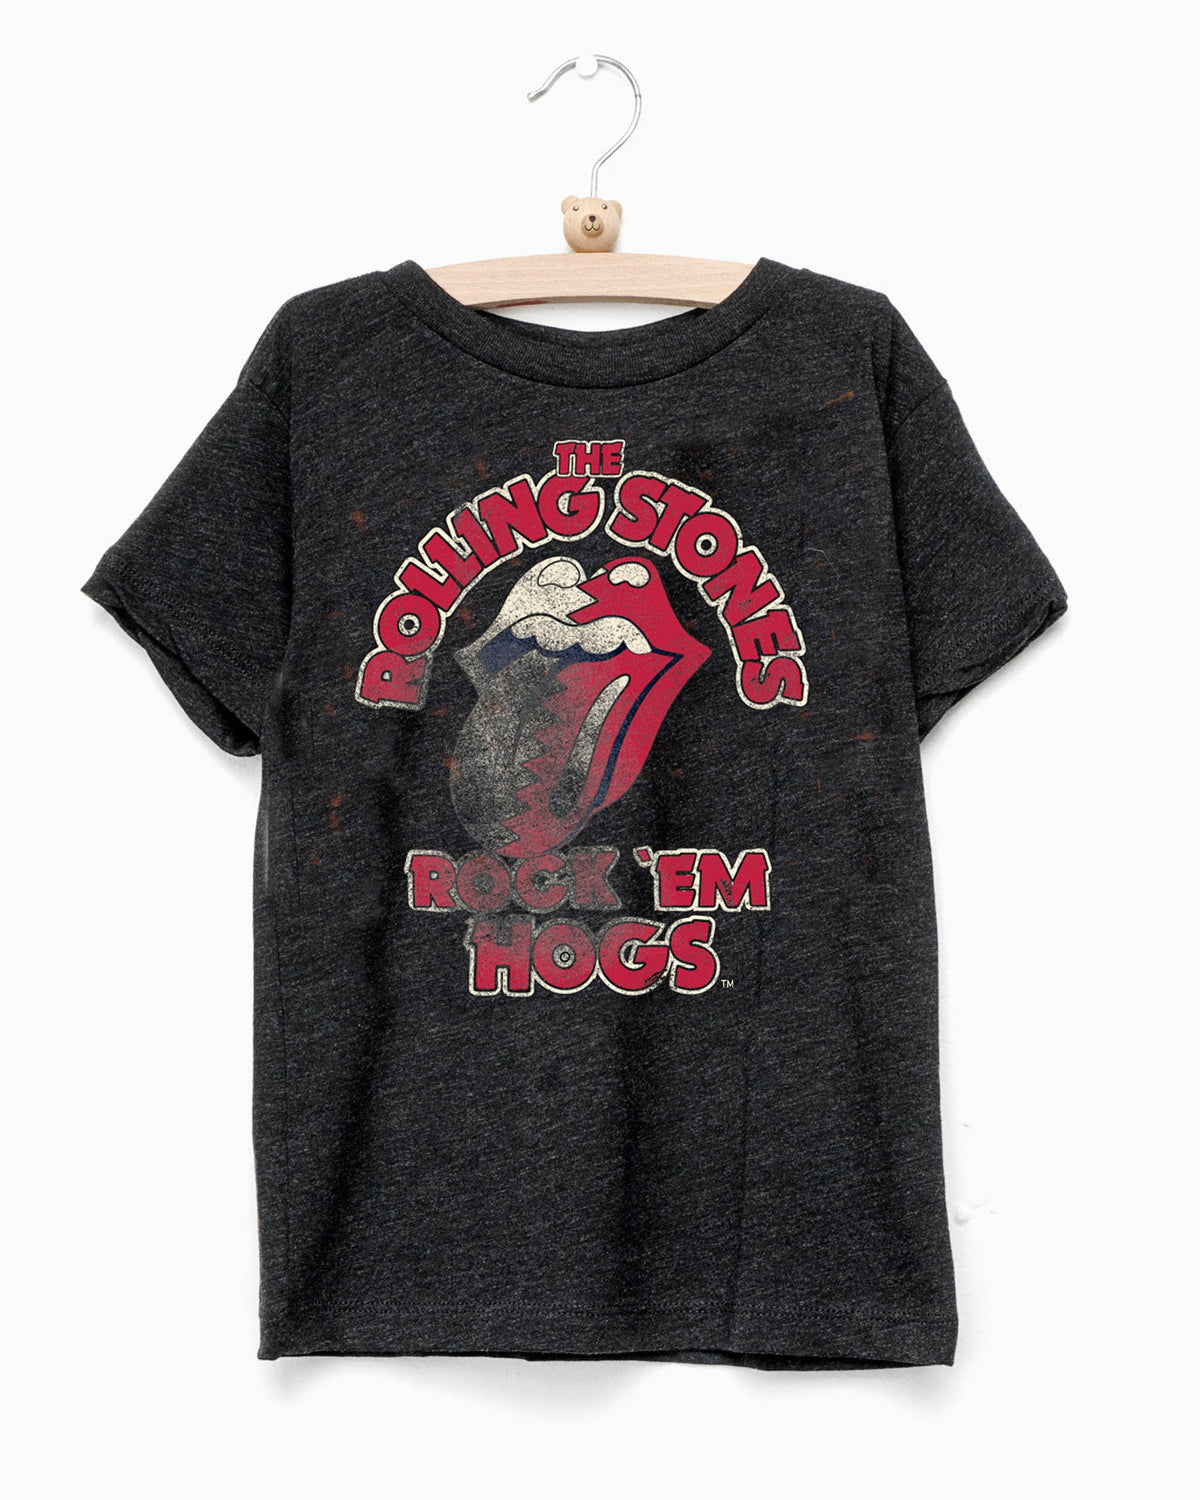 Children's Rolling Stones Rock 'Em Hogs Charcoal Tee - shoplivylu